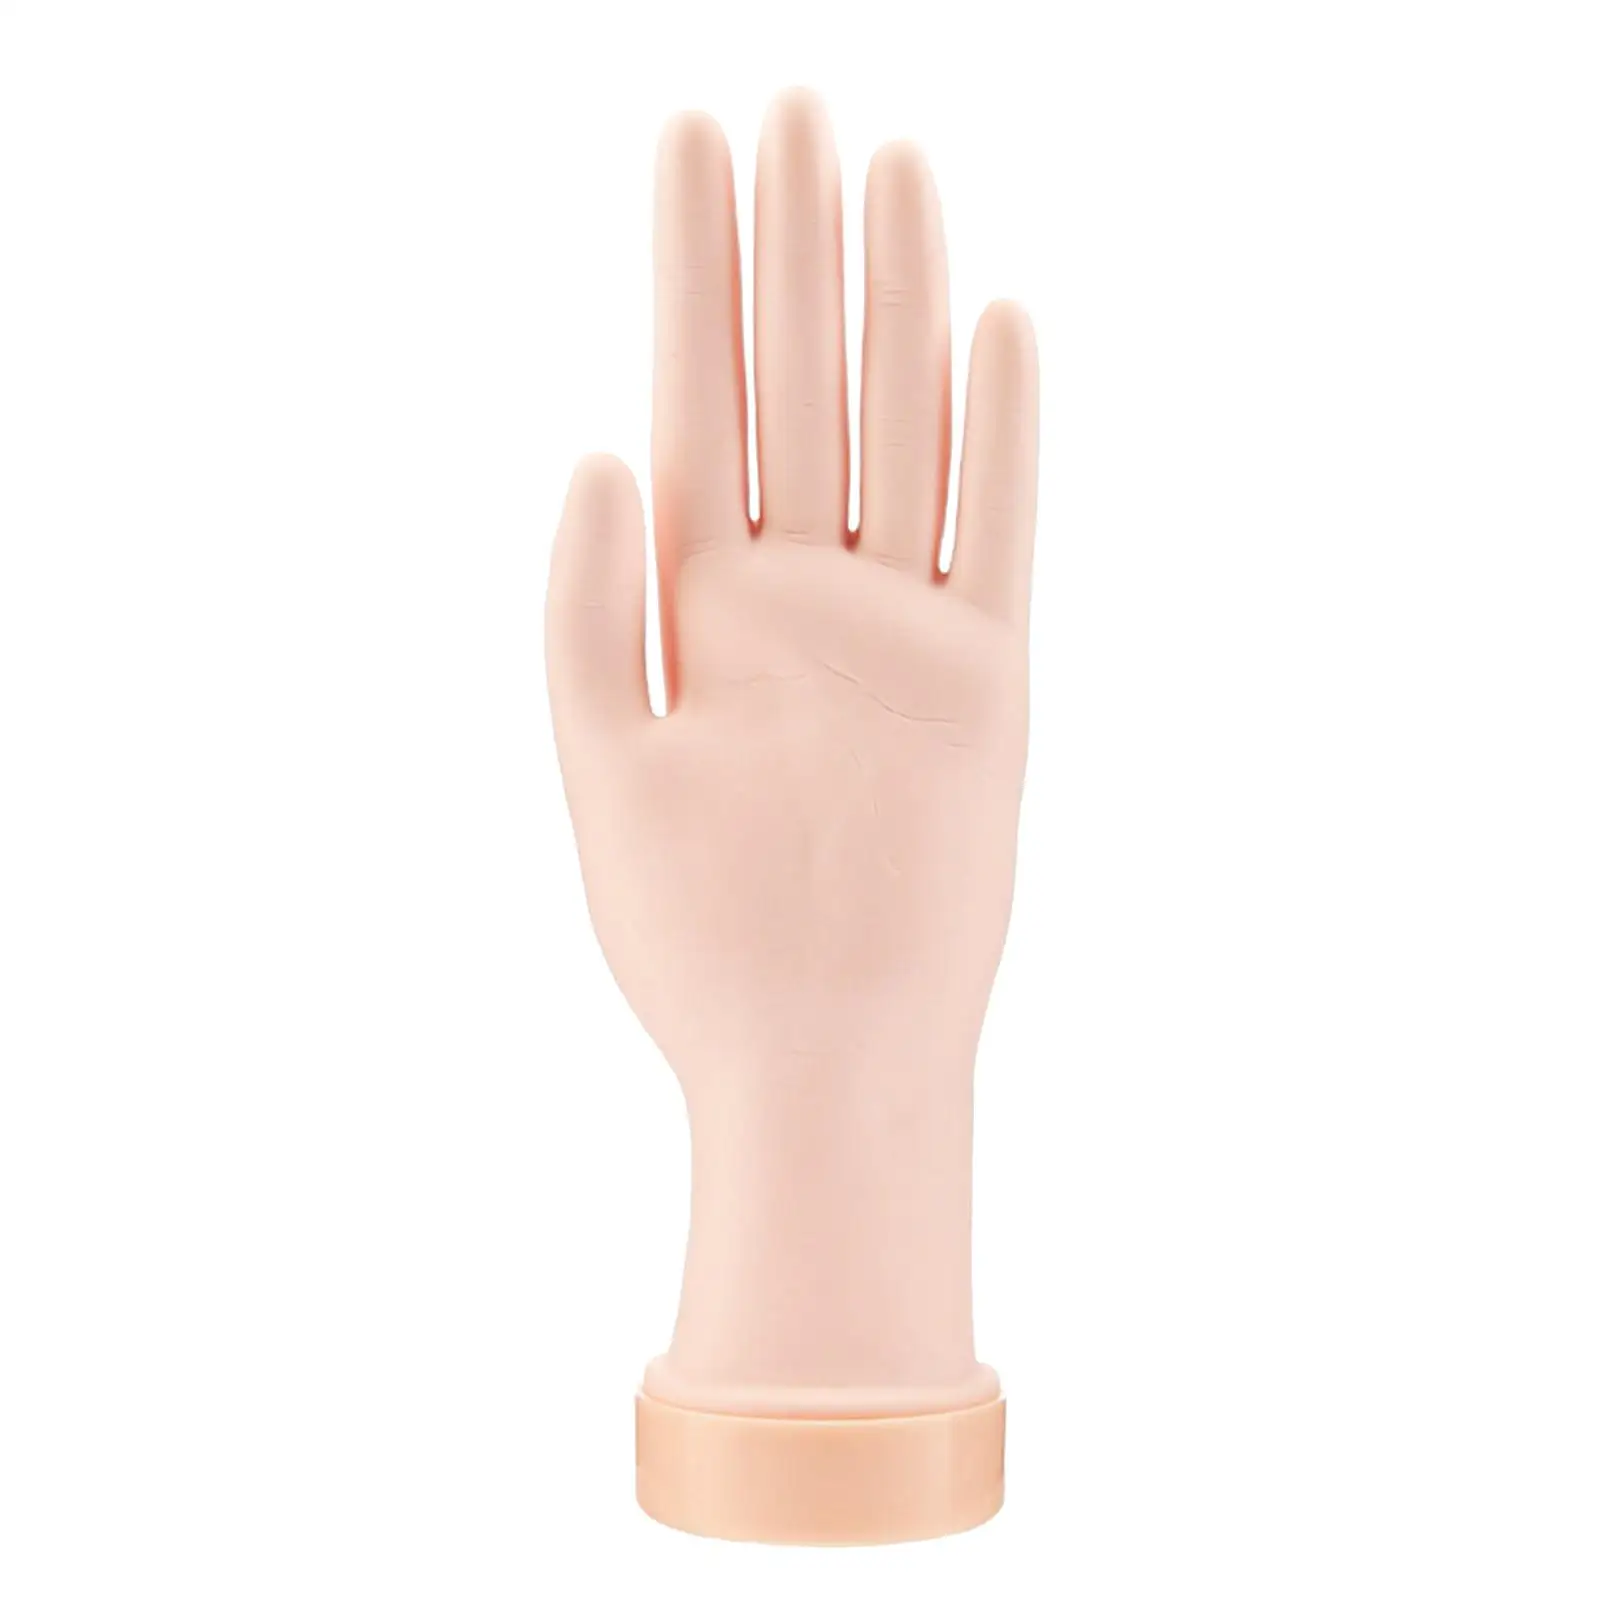 Bendable Nail Practice Hand Realistic Flexible Model Mannequin Hand for Salon Nail Art Design